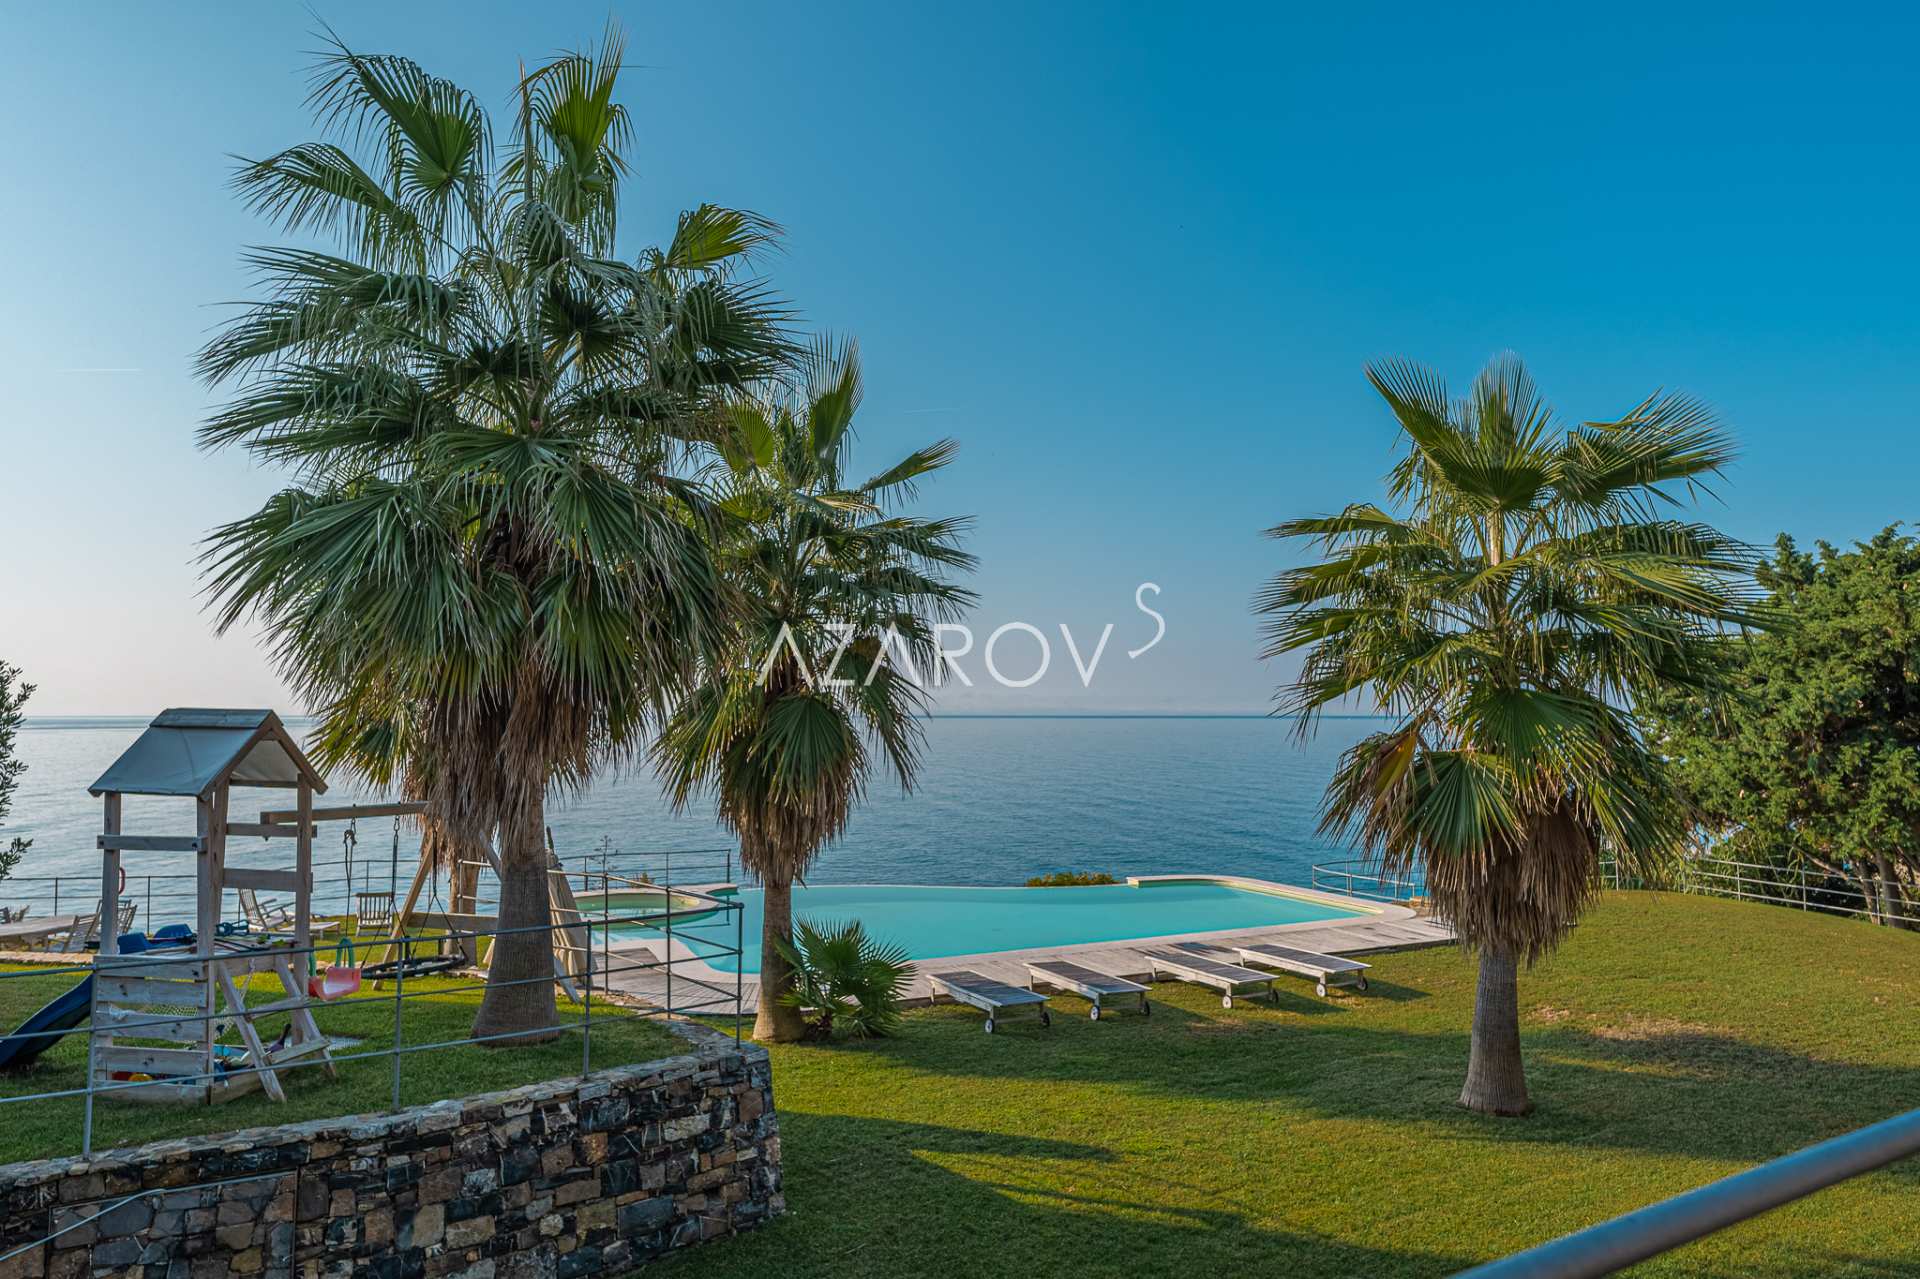 Sale villa with private beach Sanremo, Buy villa on the first line of ...